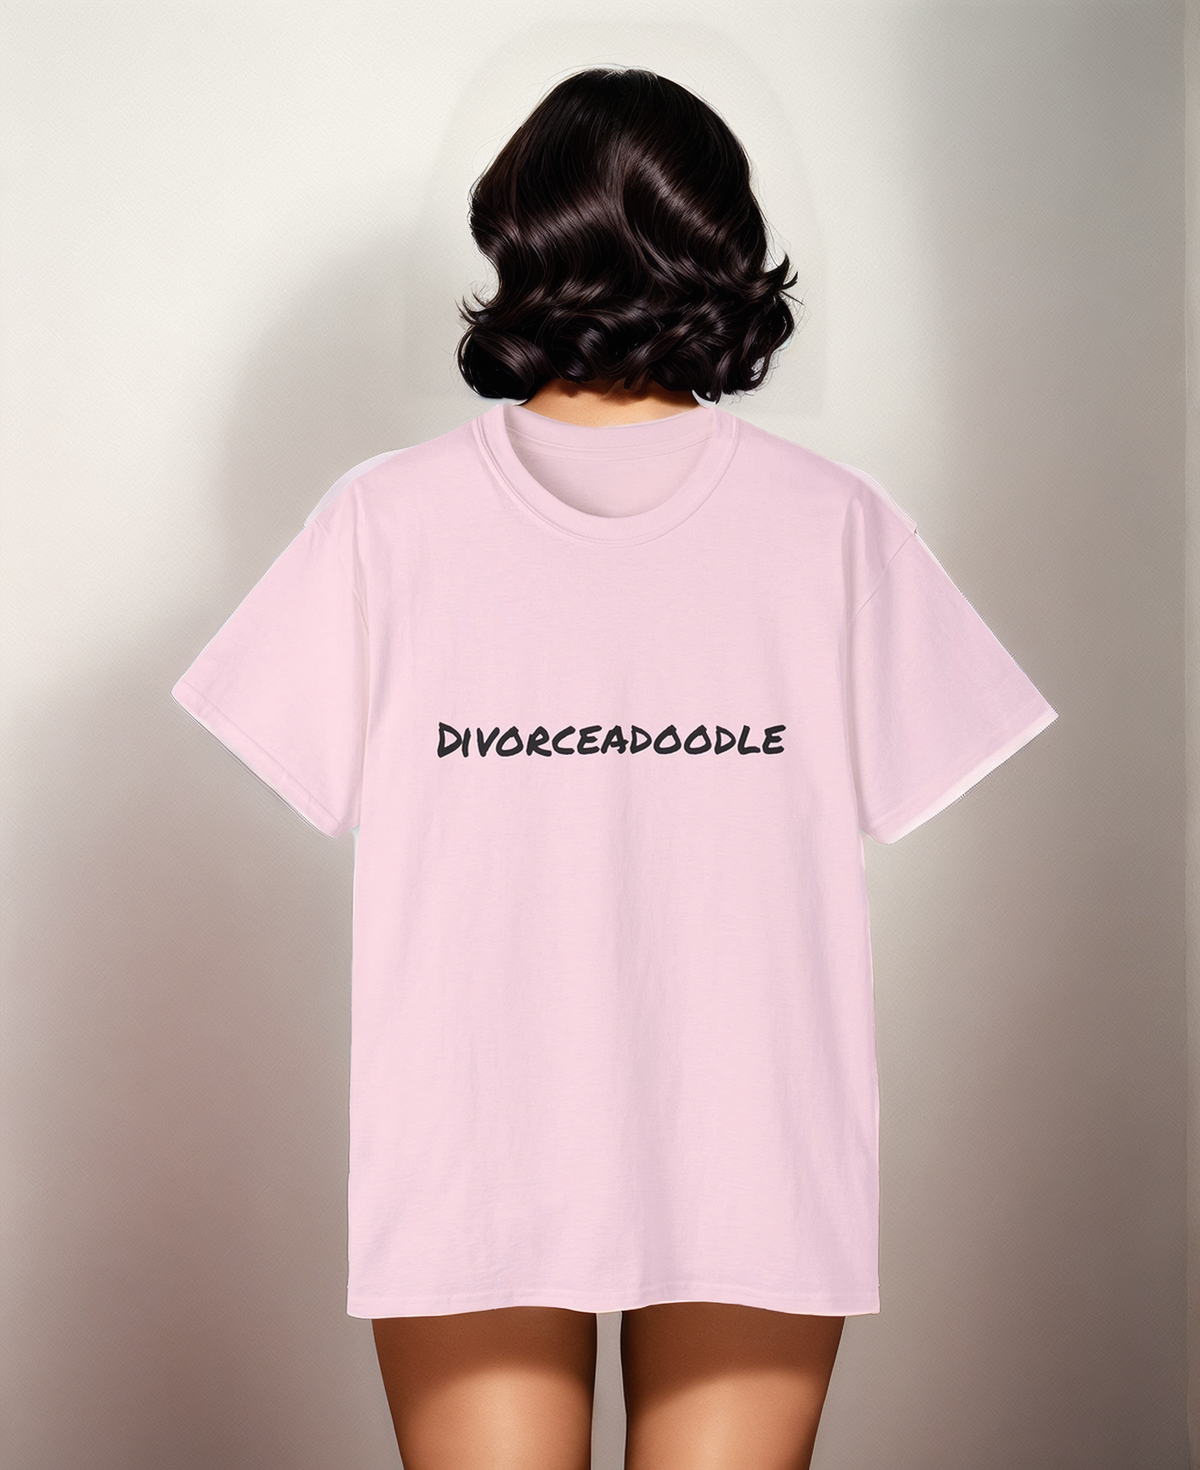 "Divorceadoodle" Jest in Bad Taste original (Unisex Tee)